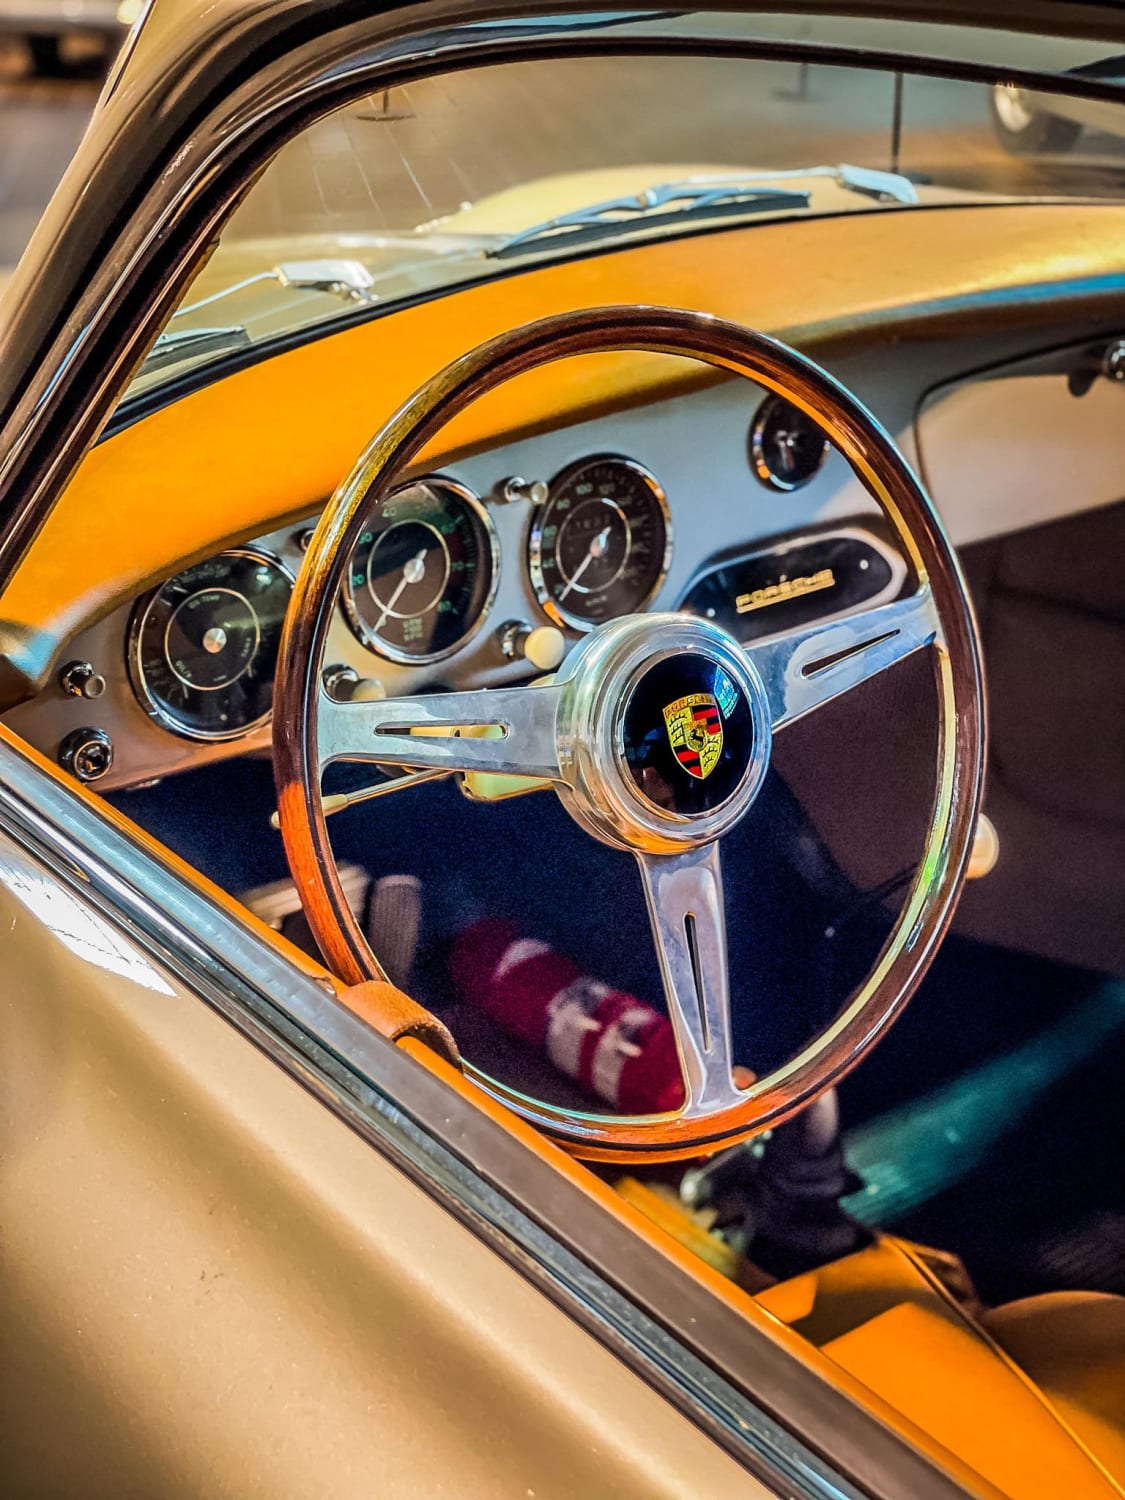 A photo of a Porsche 356 steering wheel that I took a while ago. Gorgeous car